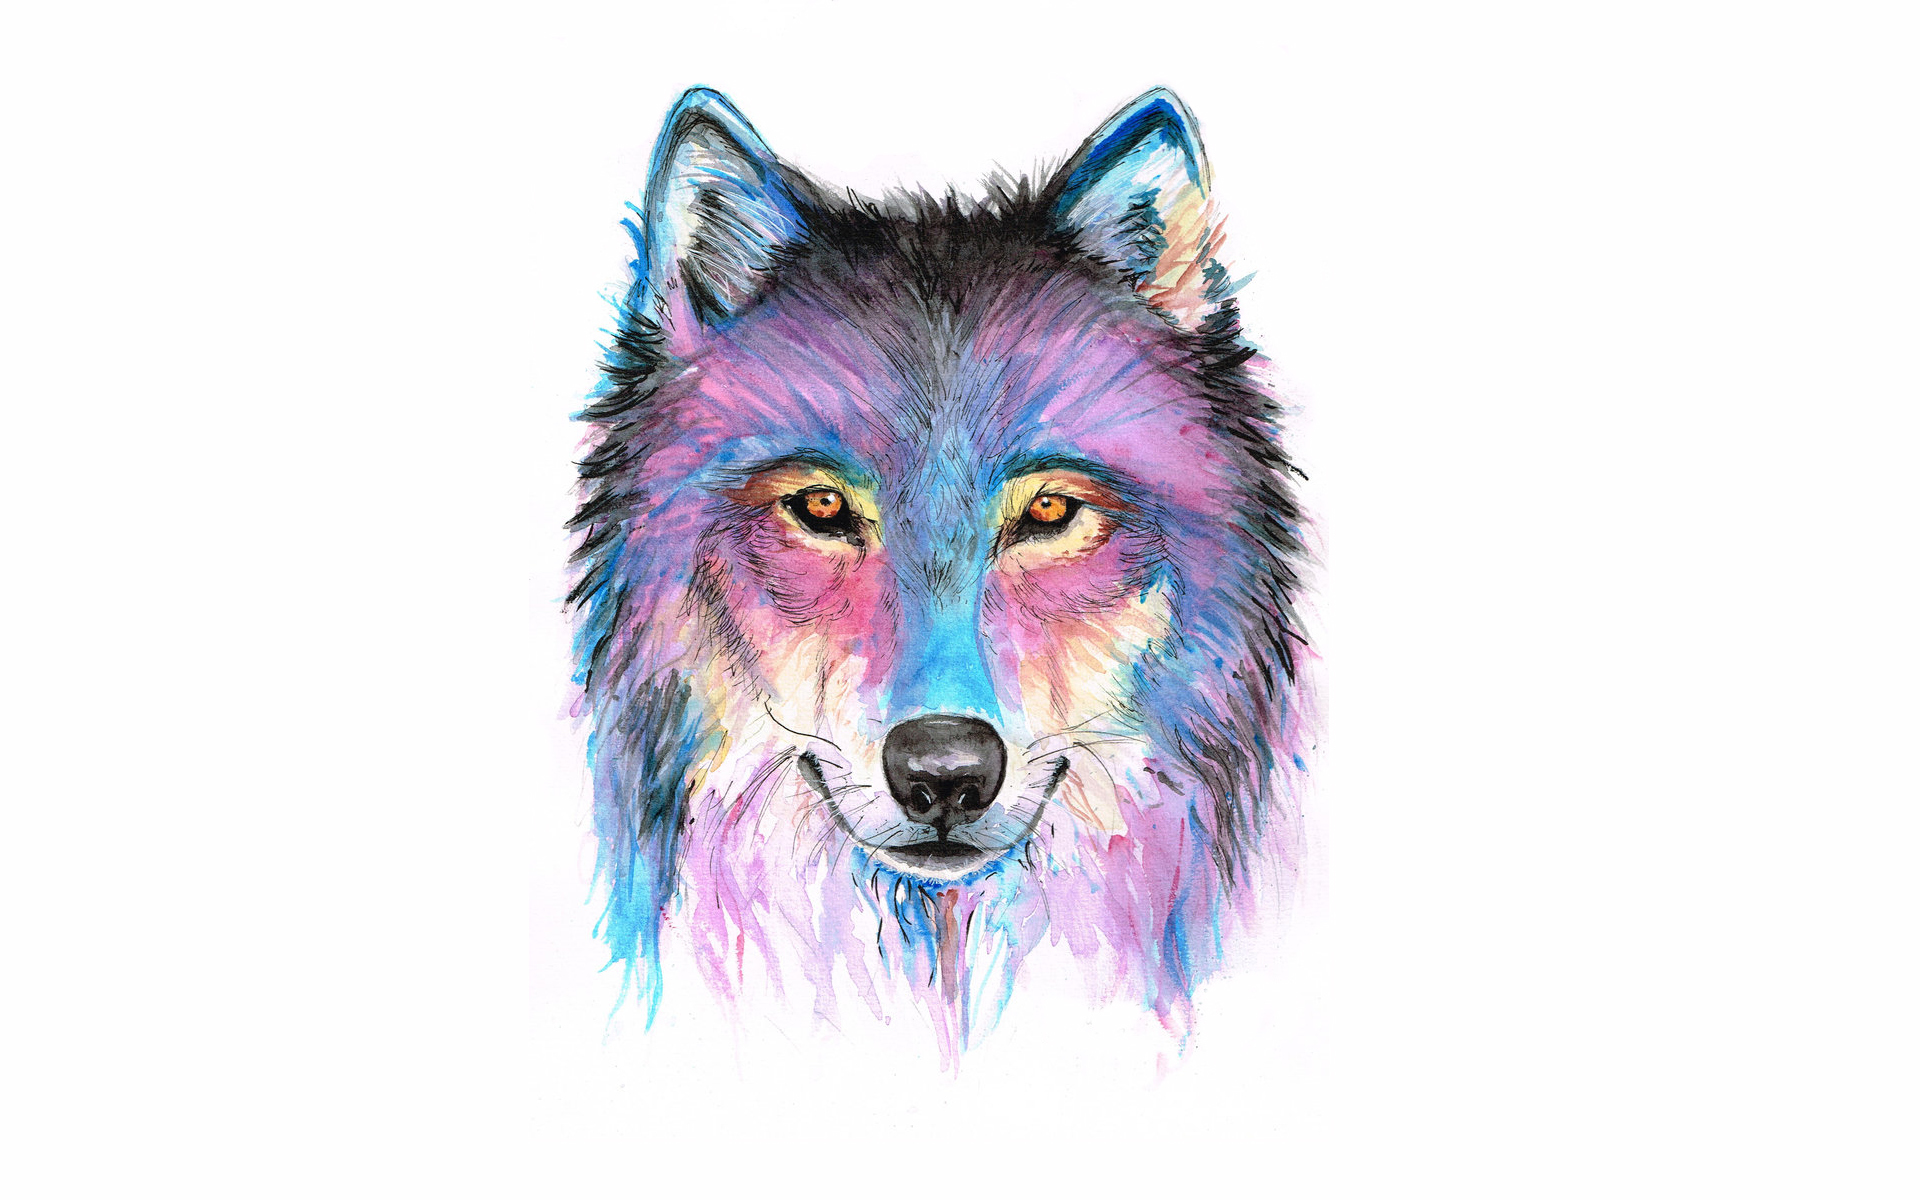 Цветные картинки волка. Волк рисунок. Морда волка рисунок. Разноцветный волк. Голова волка рисунок.